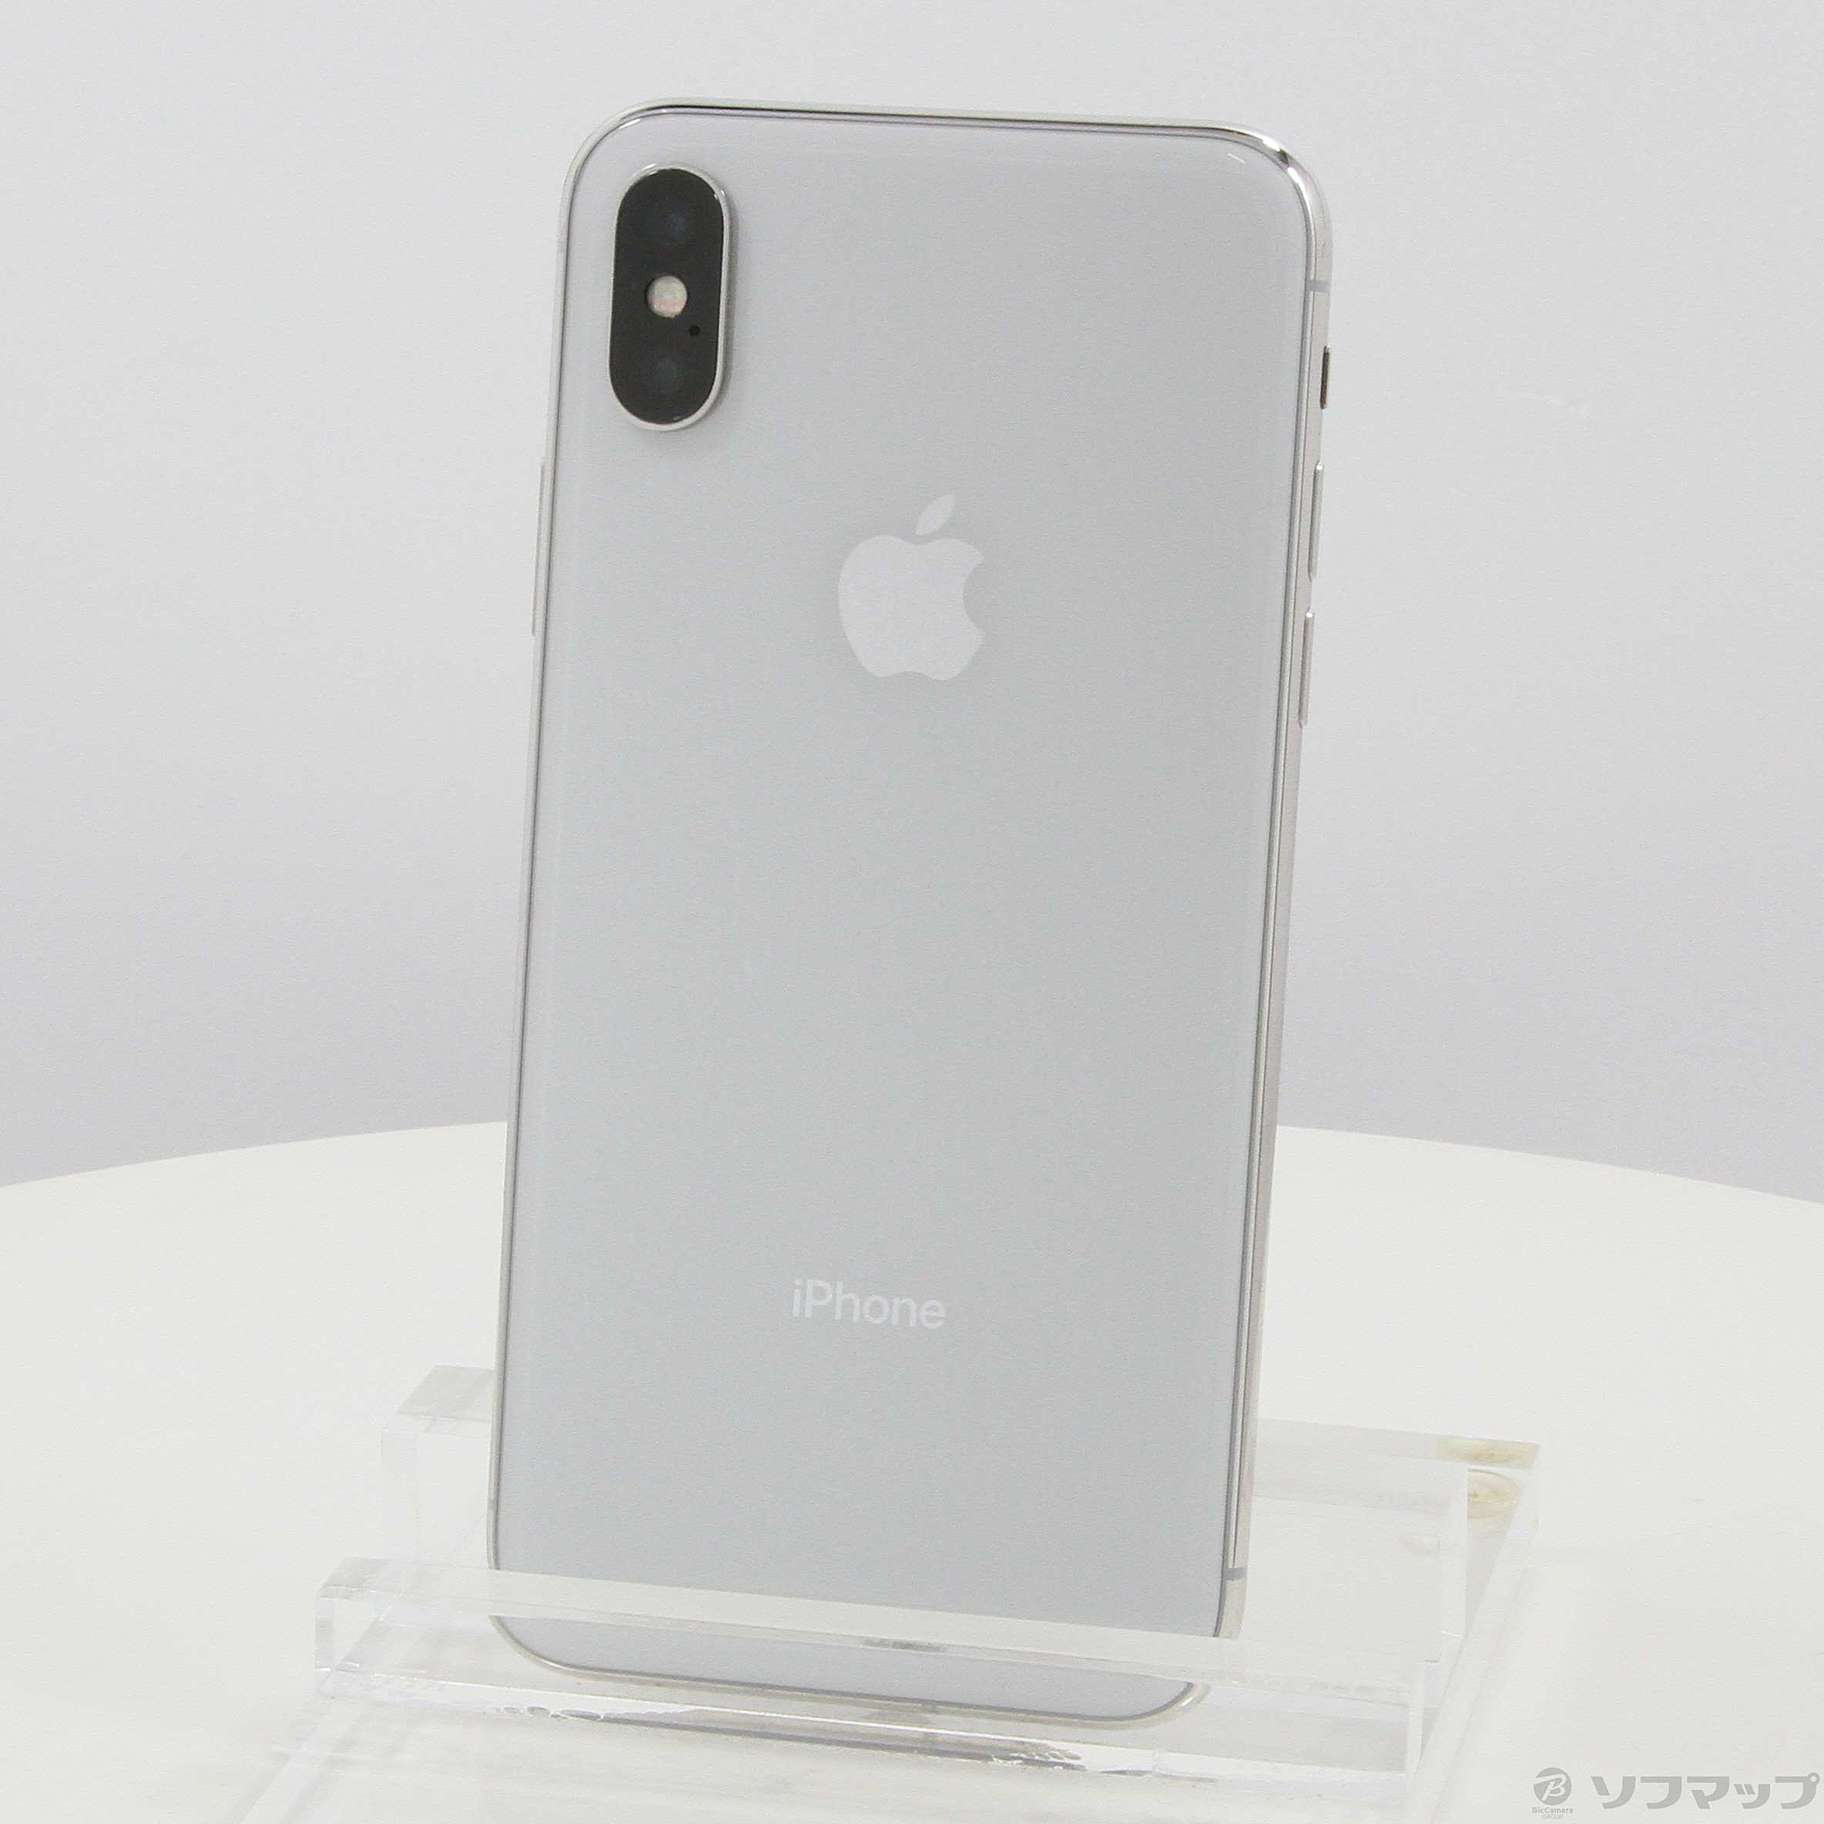 iPhoneX 64G silver